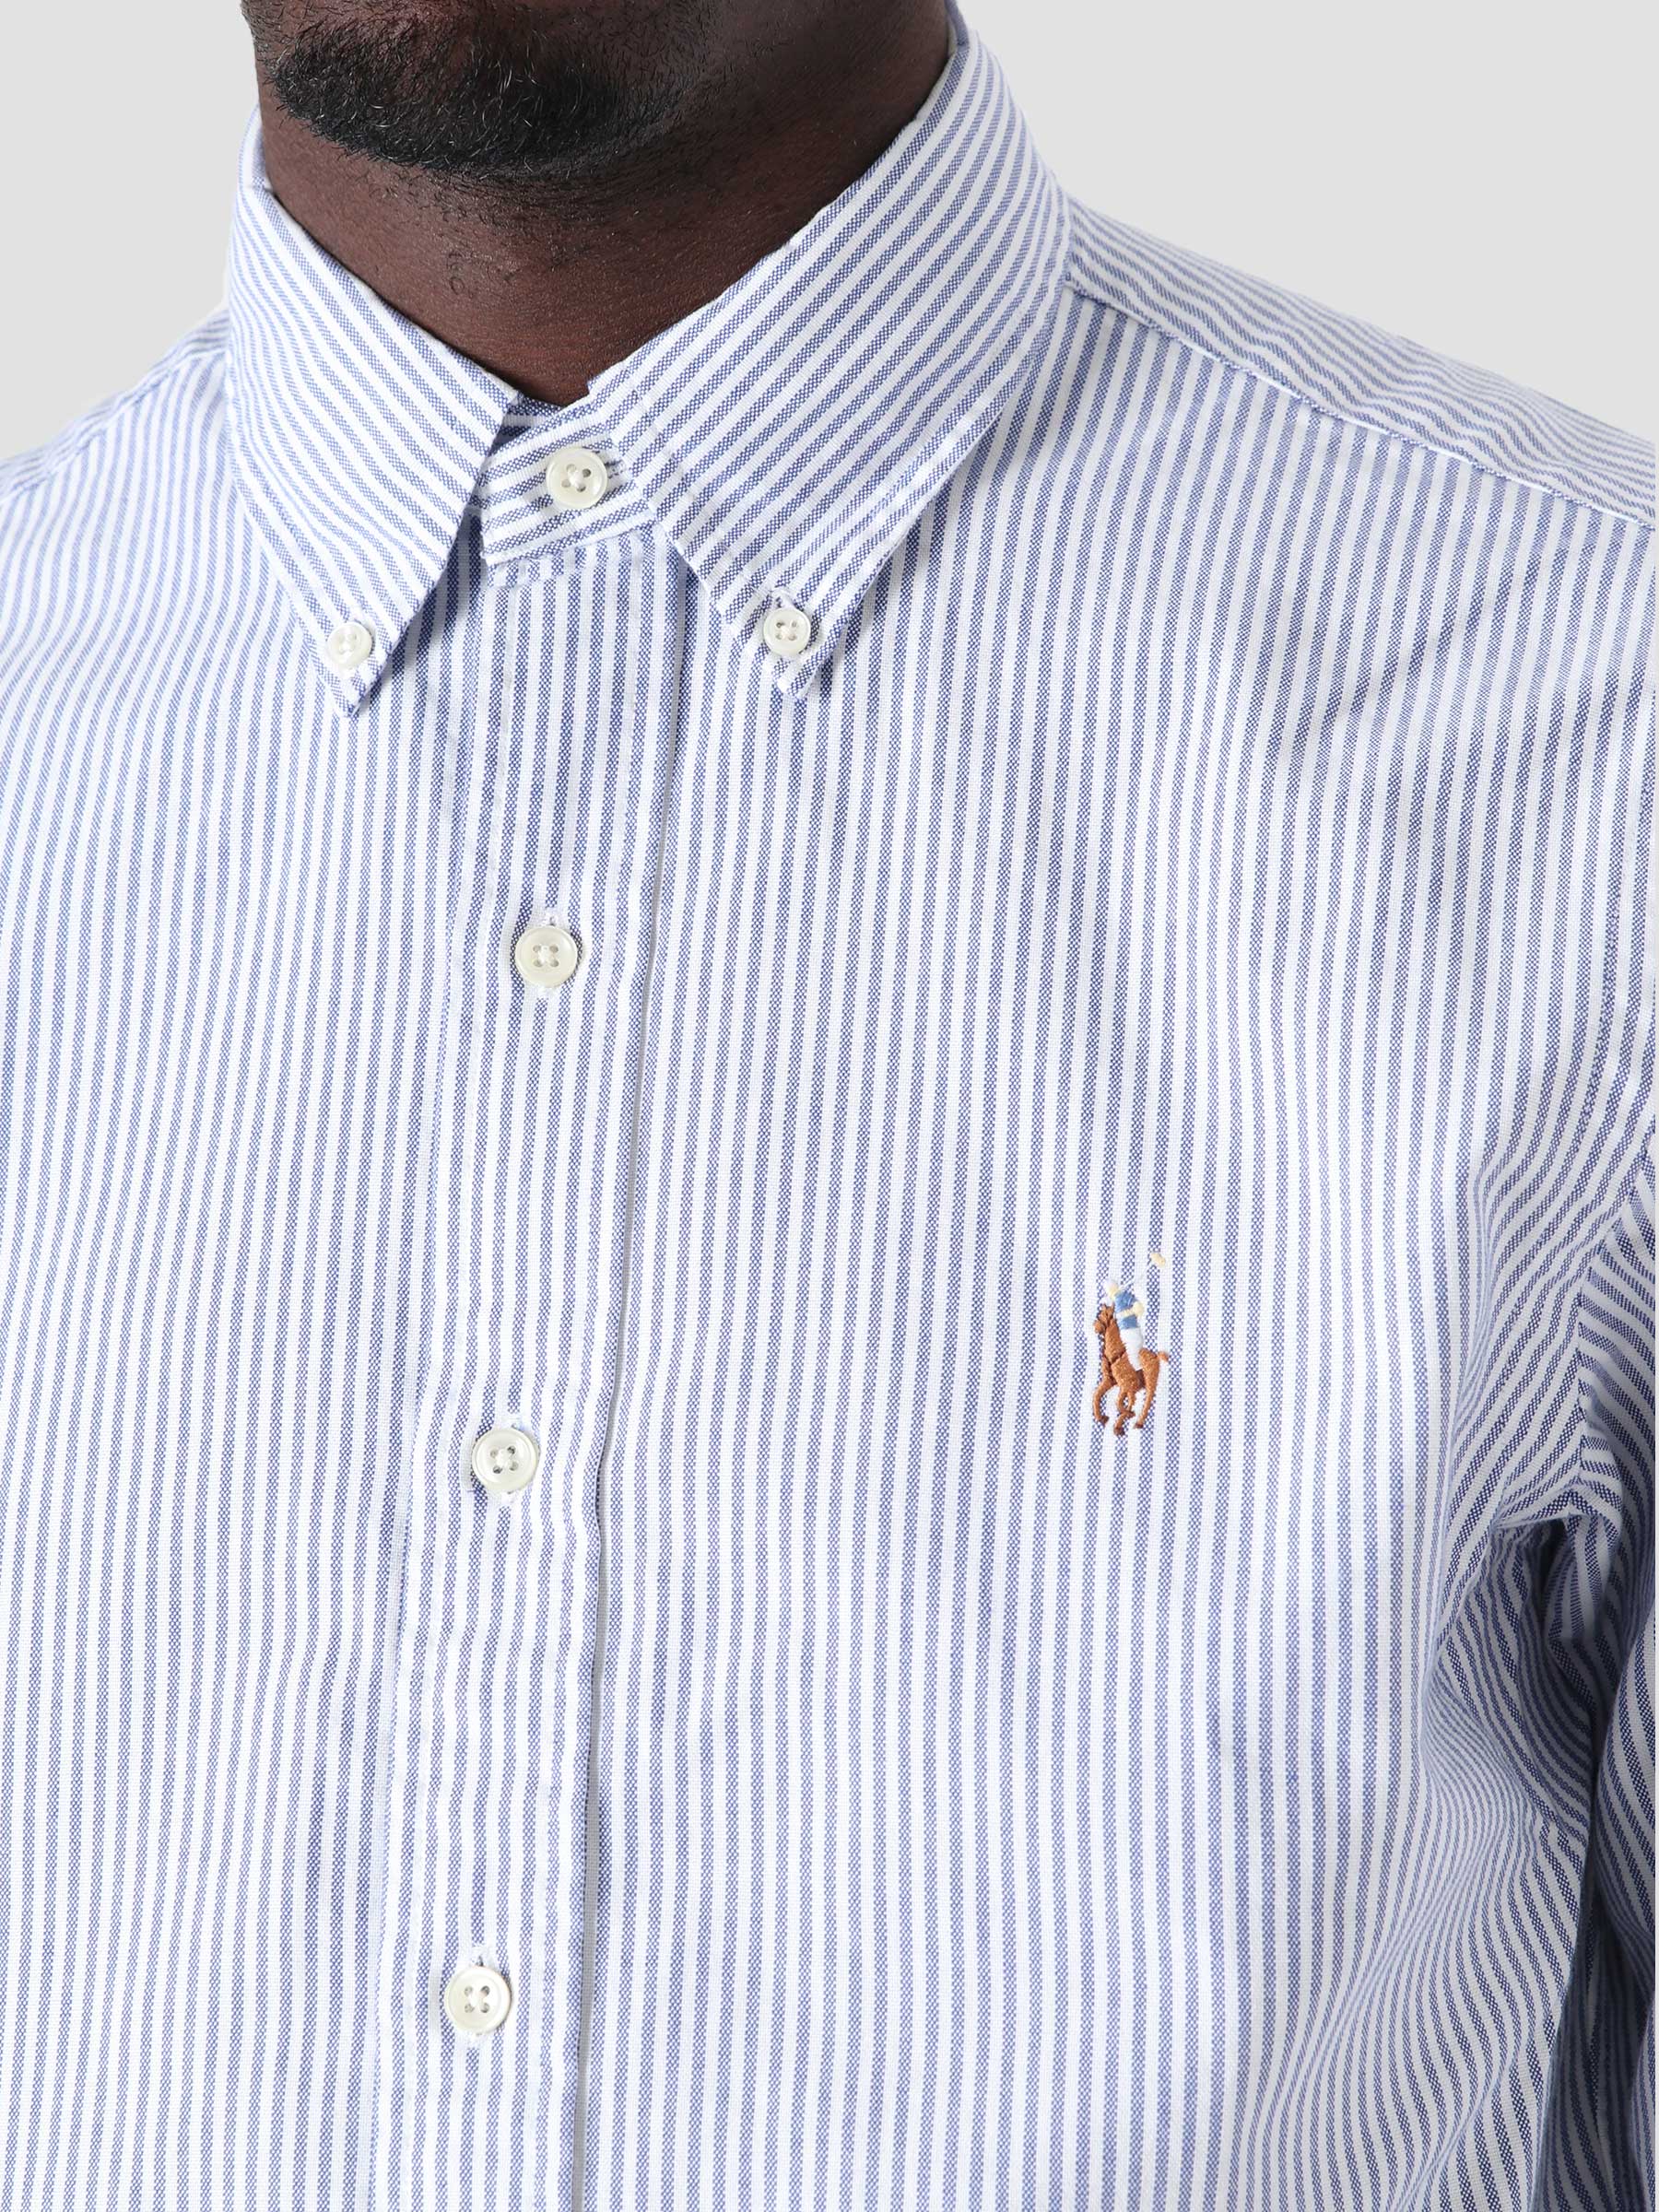 Classic Oxford Shirt 4830A Blue White 710853131002